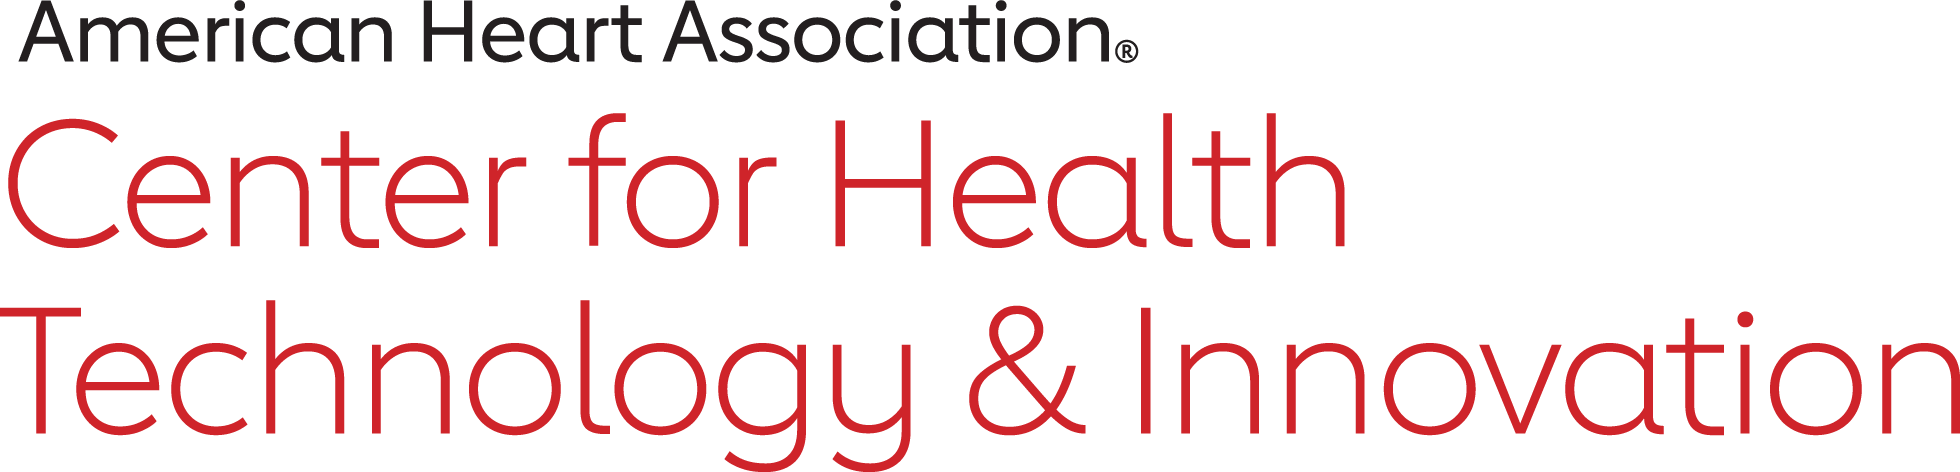 American Heart Association Center for Health Technology & Innovation